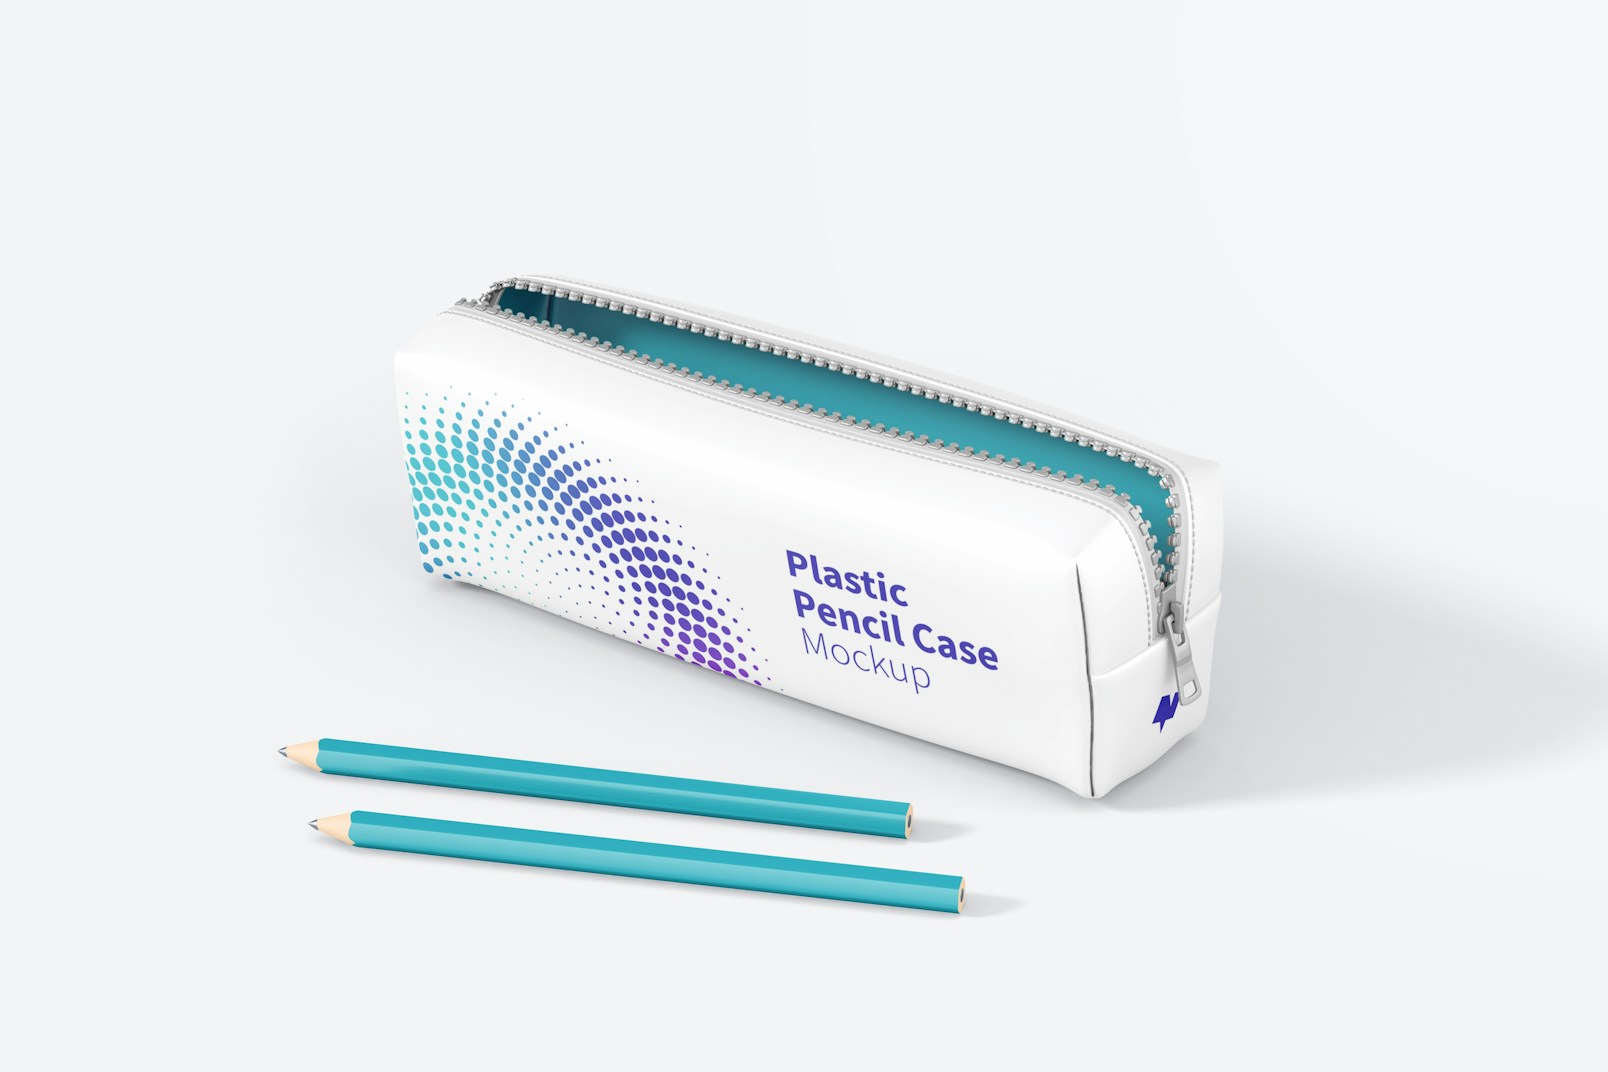 Plastic Pencil Case Mockup